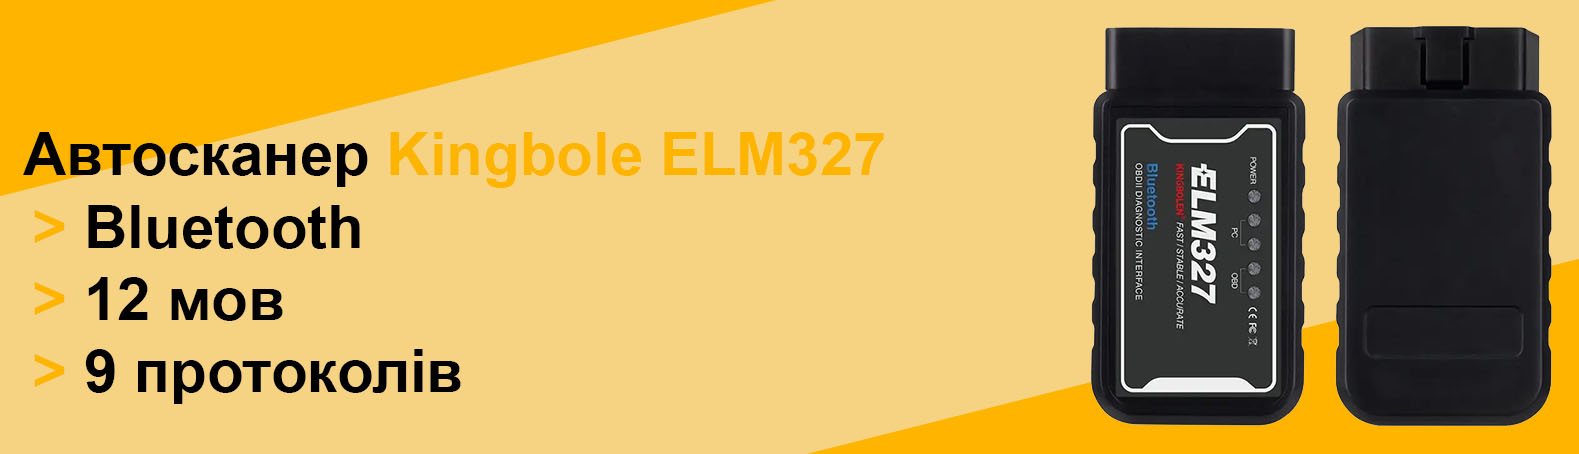 Kingbolen ELM327